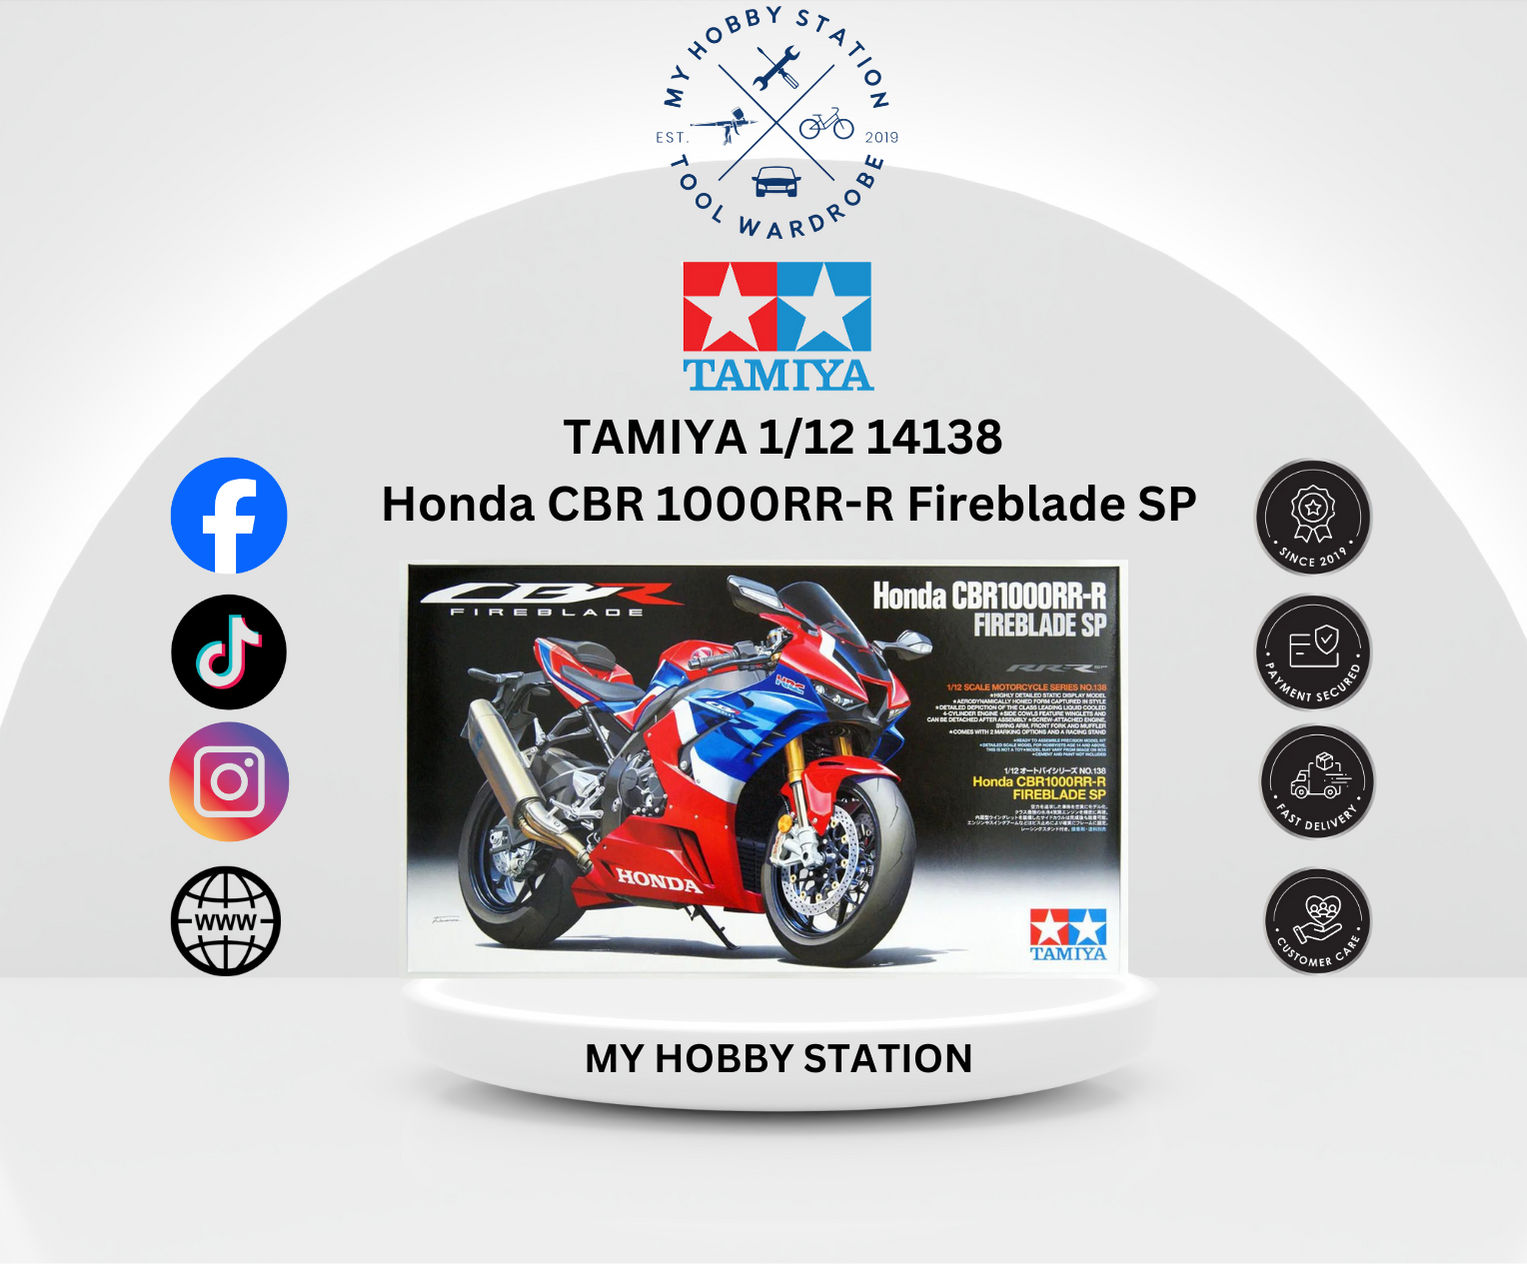 TAMIYA Airbrush Cleaner 250ML 87089 – My Hobby Station - Best Hobby Toy  Shop Selangor/Malaysia